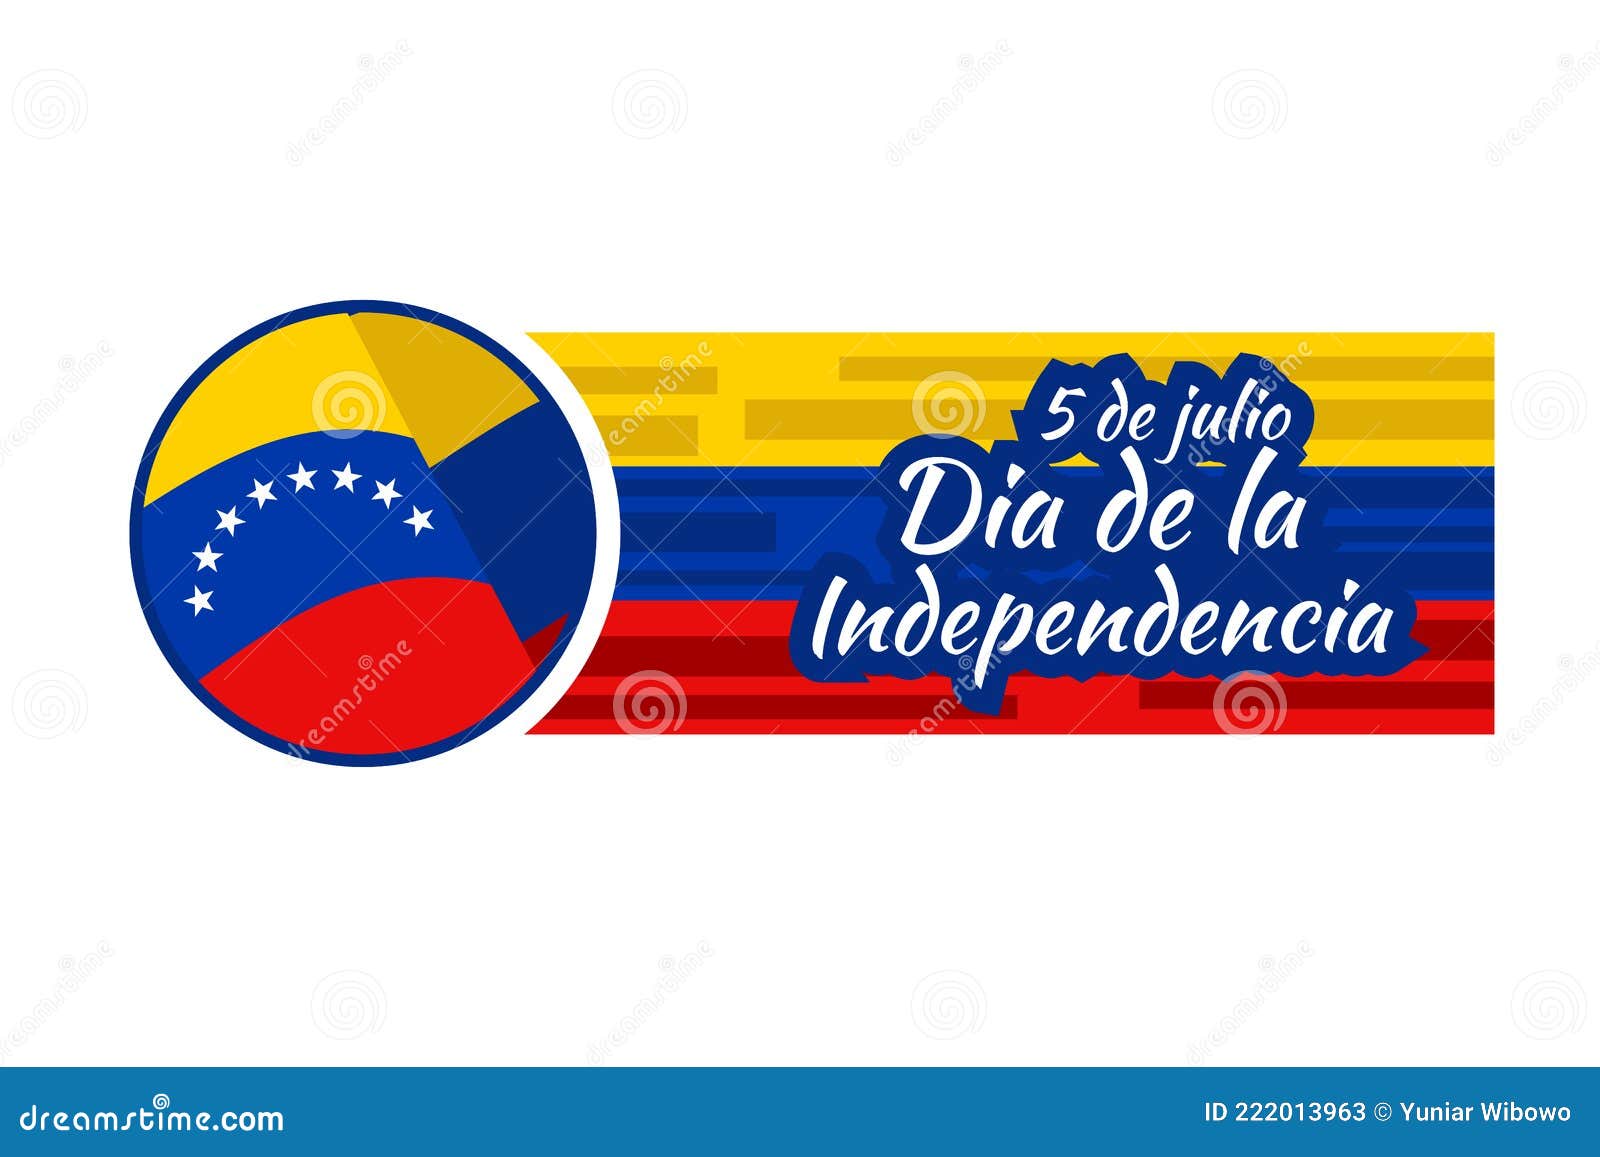 translate: july 5, independence day. independence day dia de la independencia of venezuela